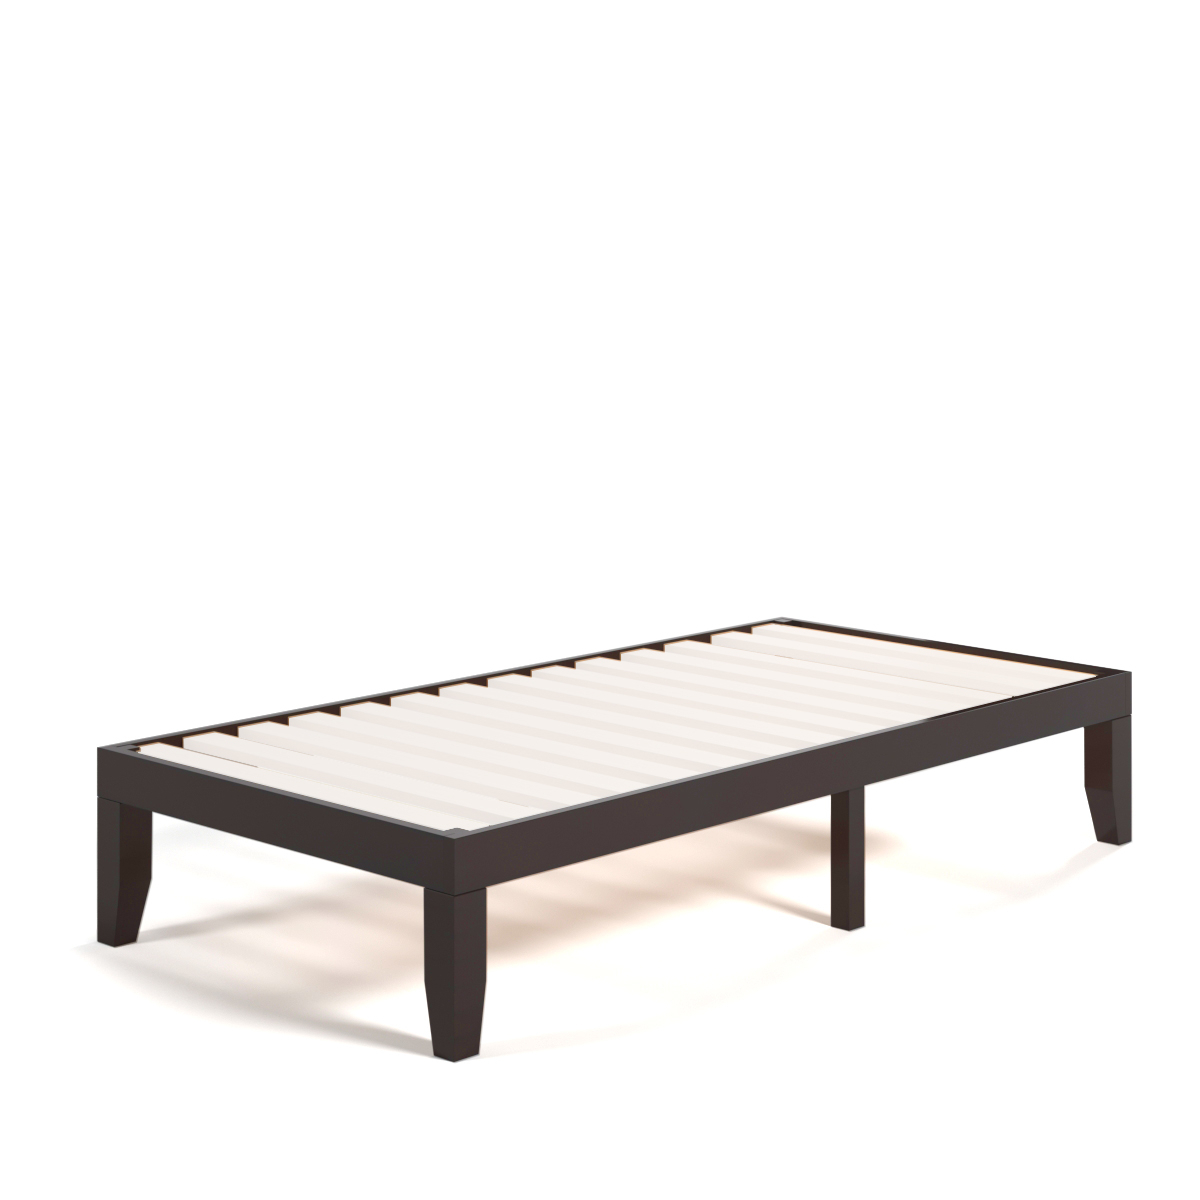 14'' Twin Size Wooden Platform Bed Frame W/ Strong Slat Support - Espresso